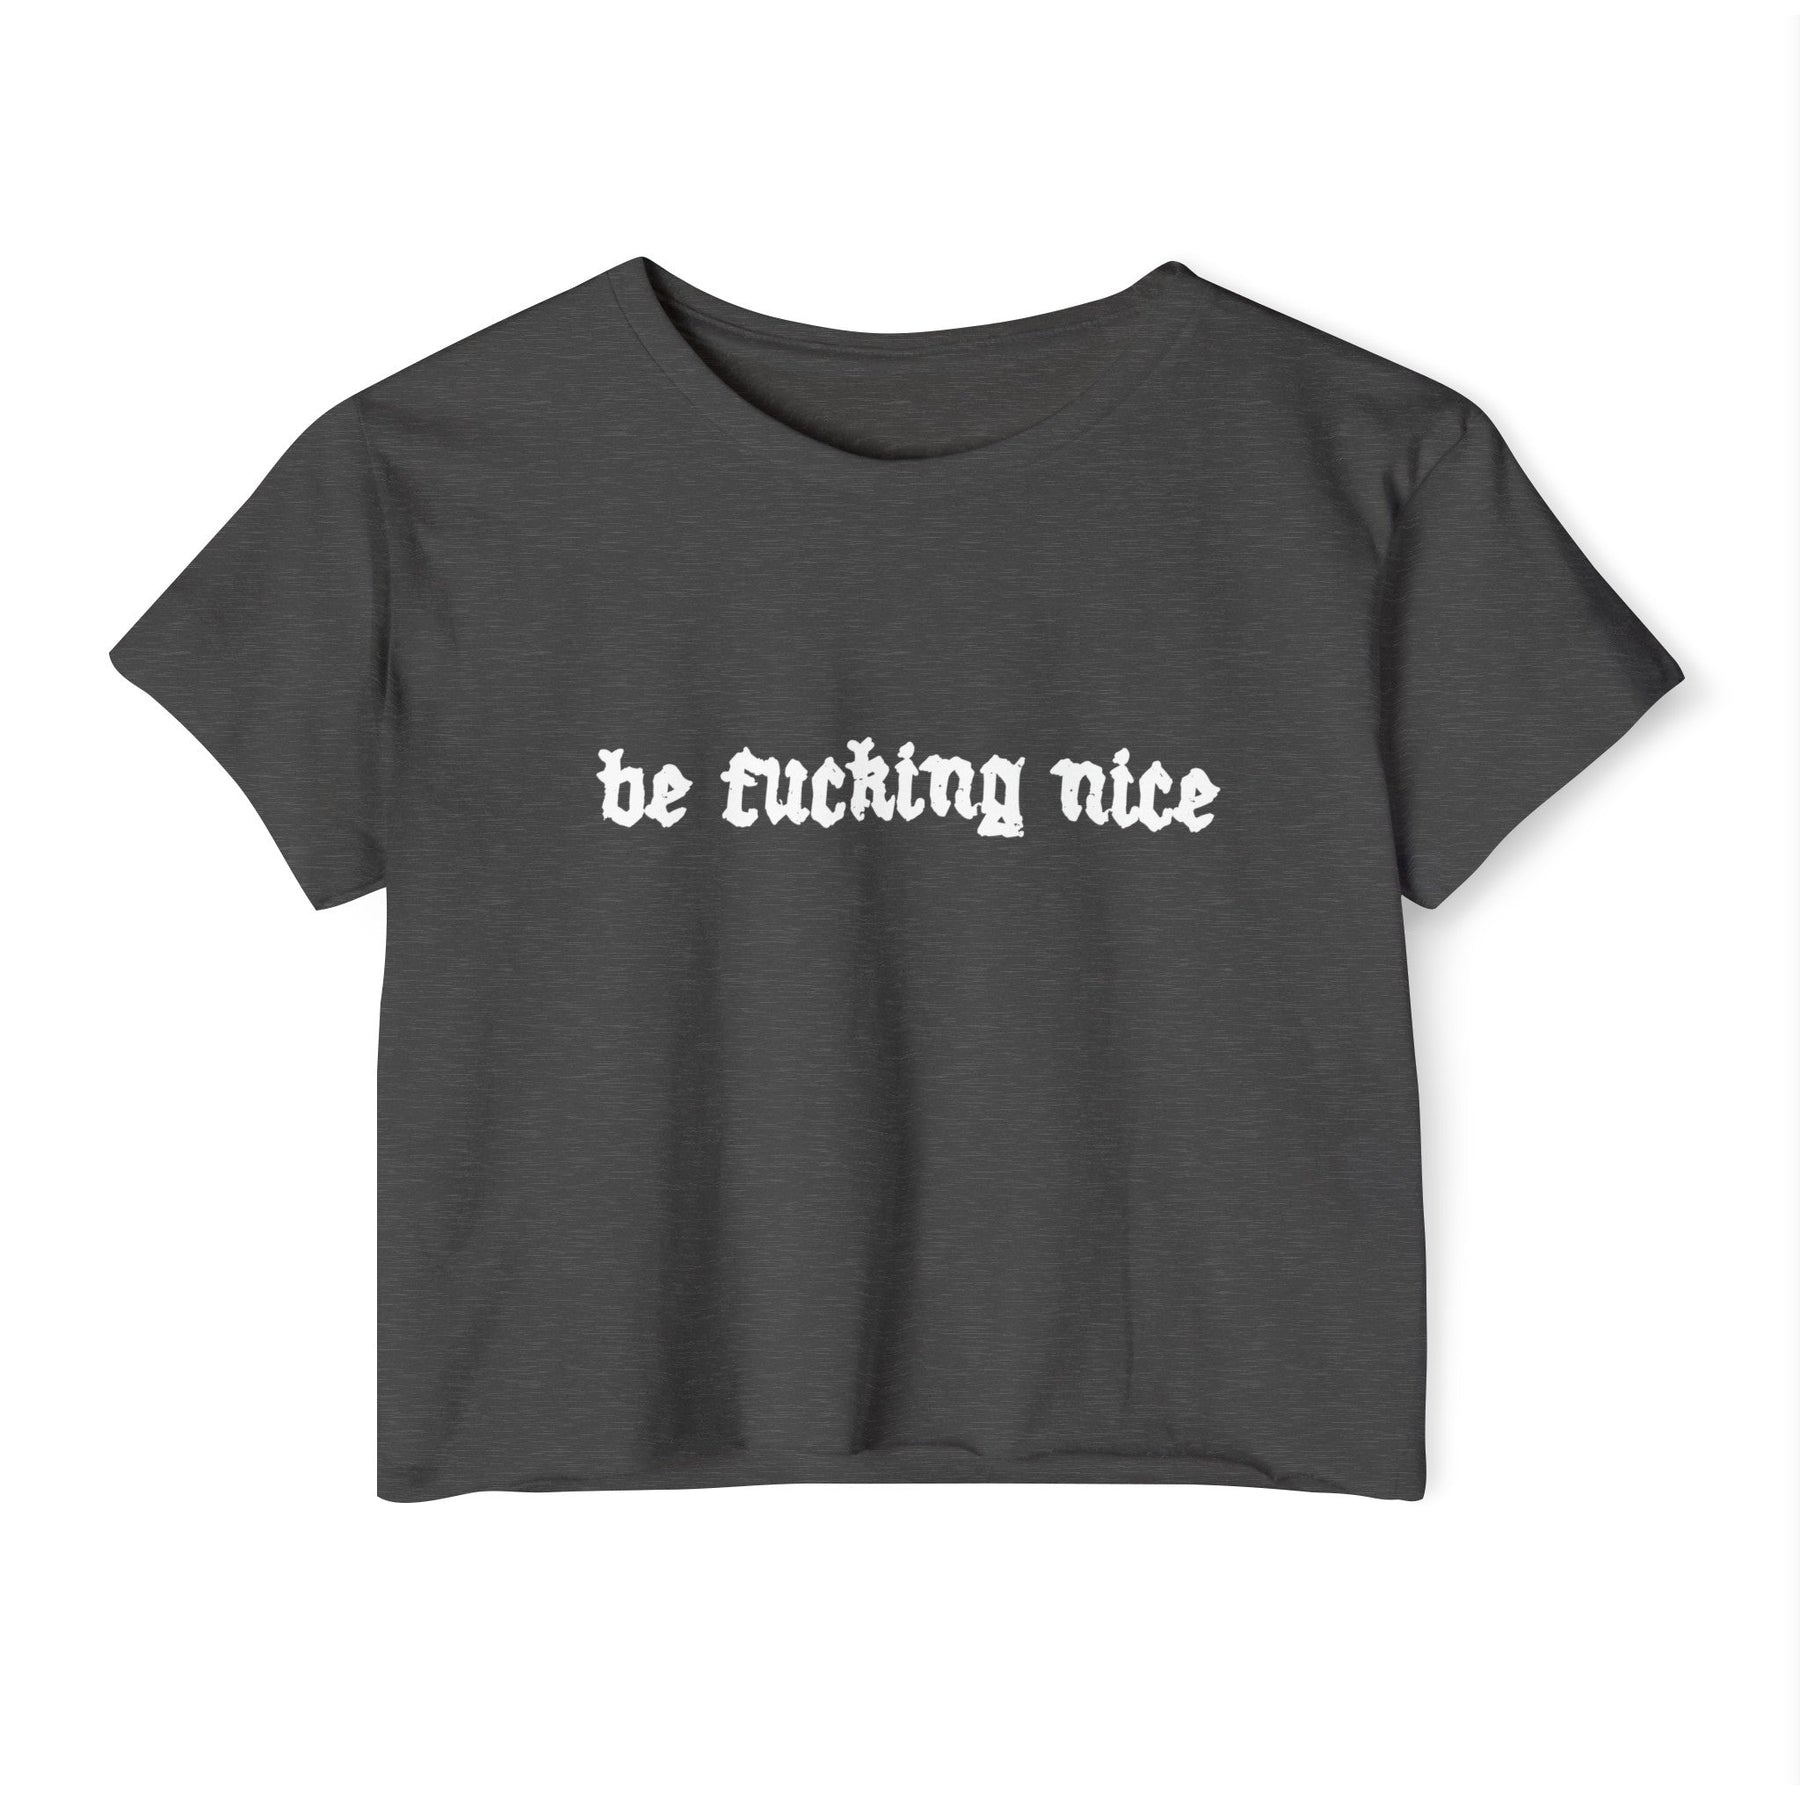 Be Fucking Nice Women's Lightweight Crop Top - Goth Cloth Co.T - Shirt12671489536984993842